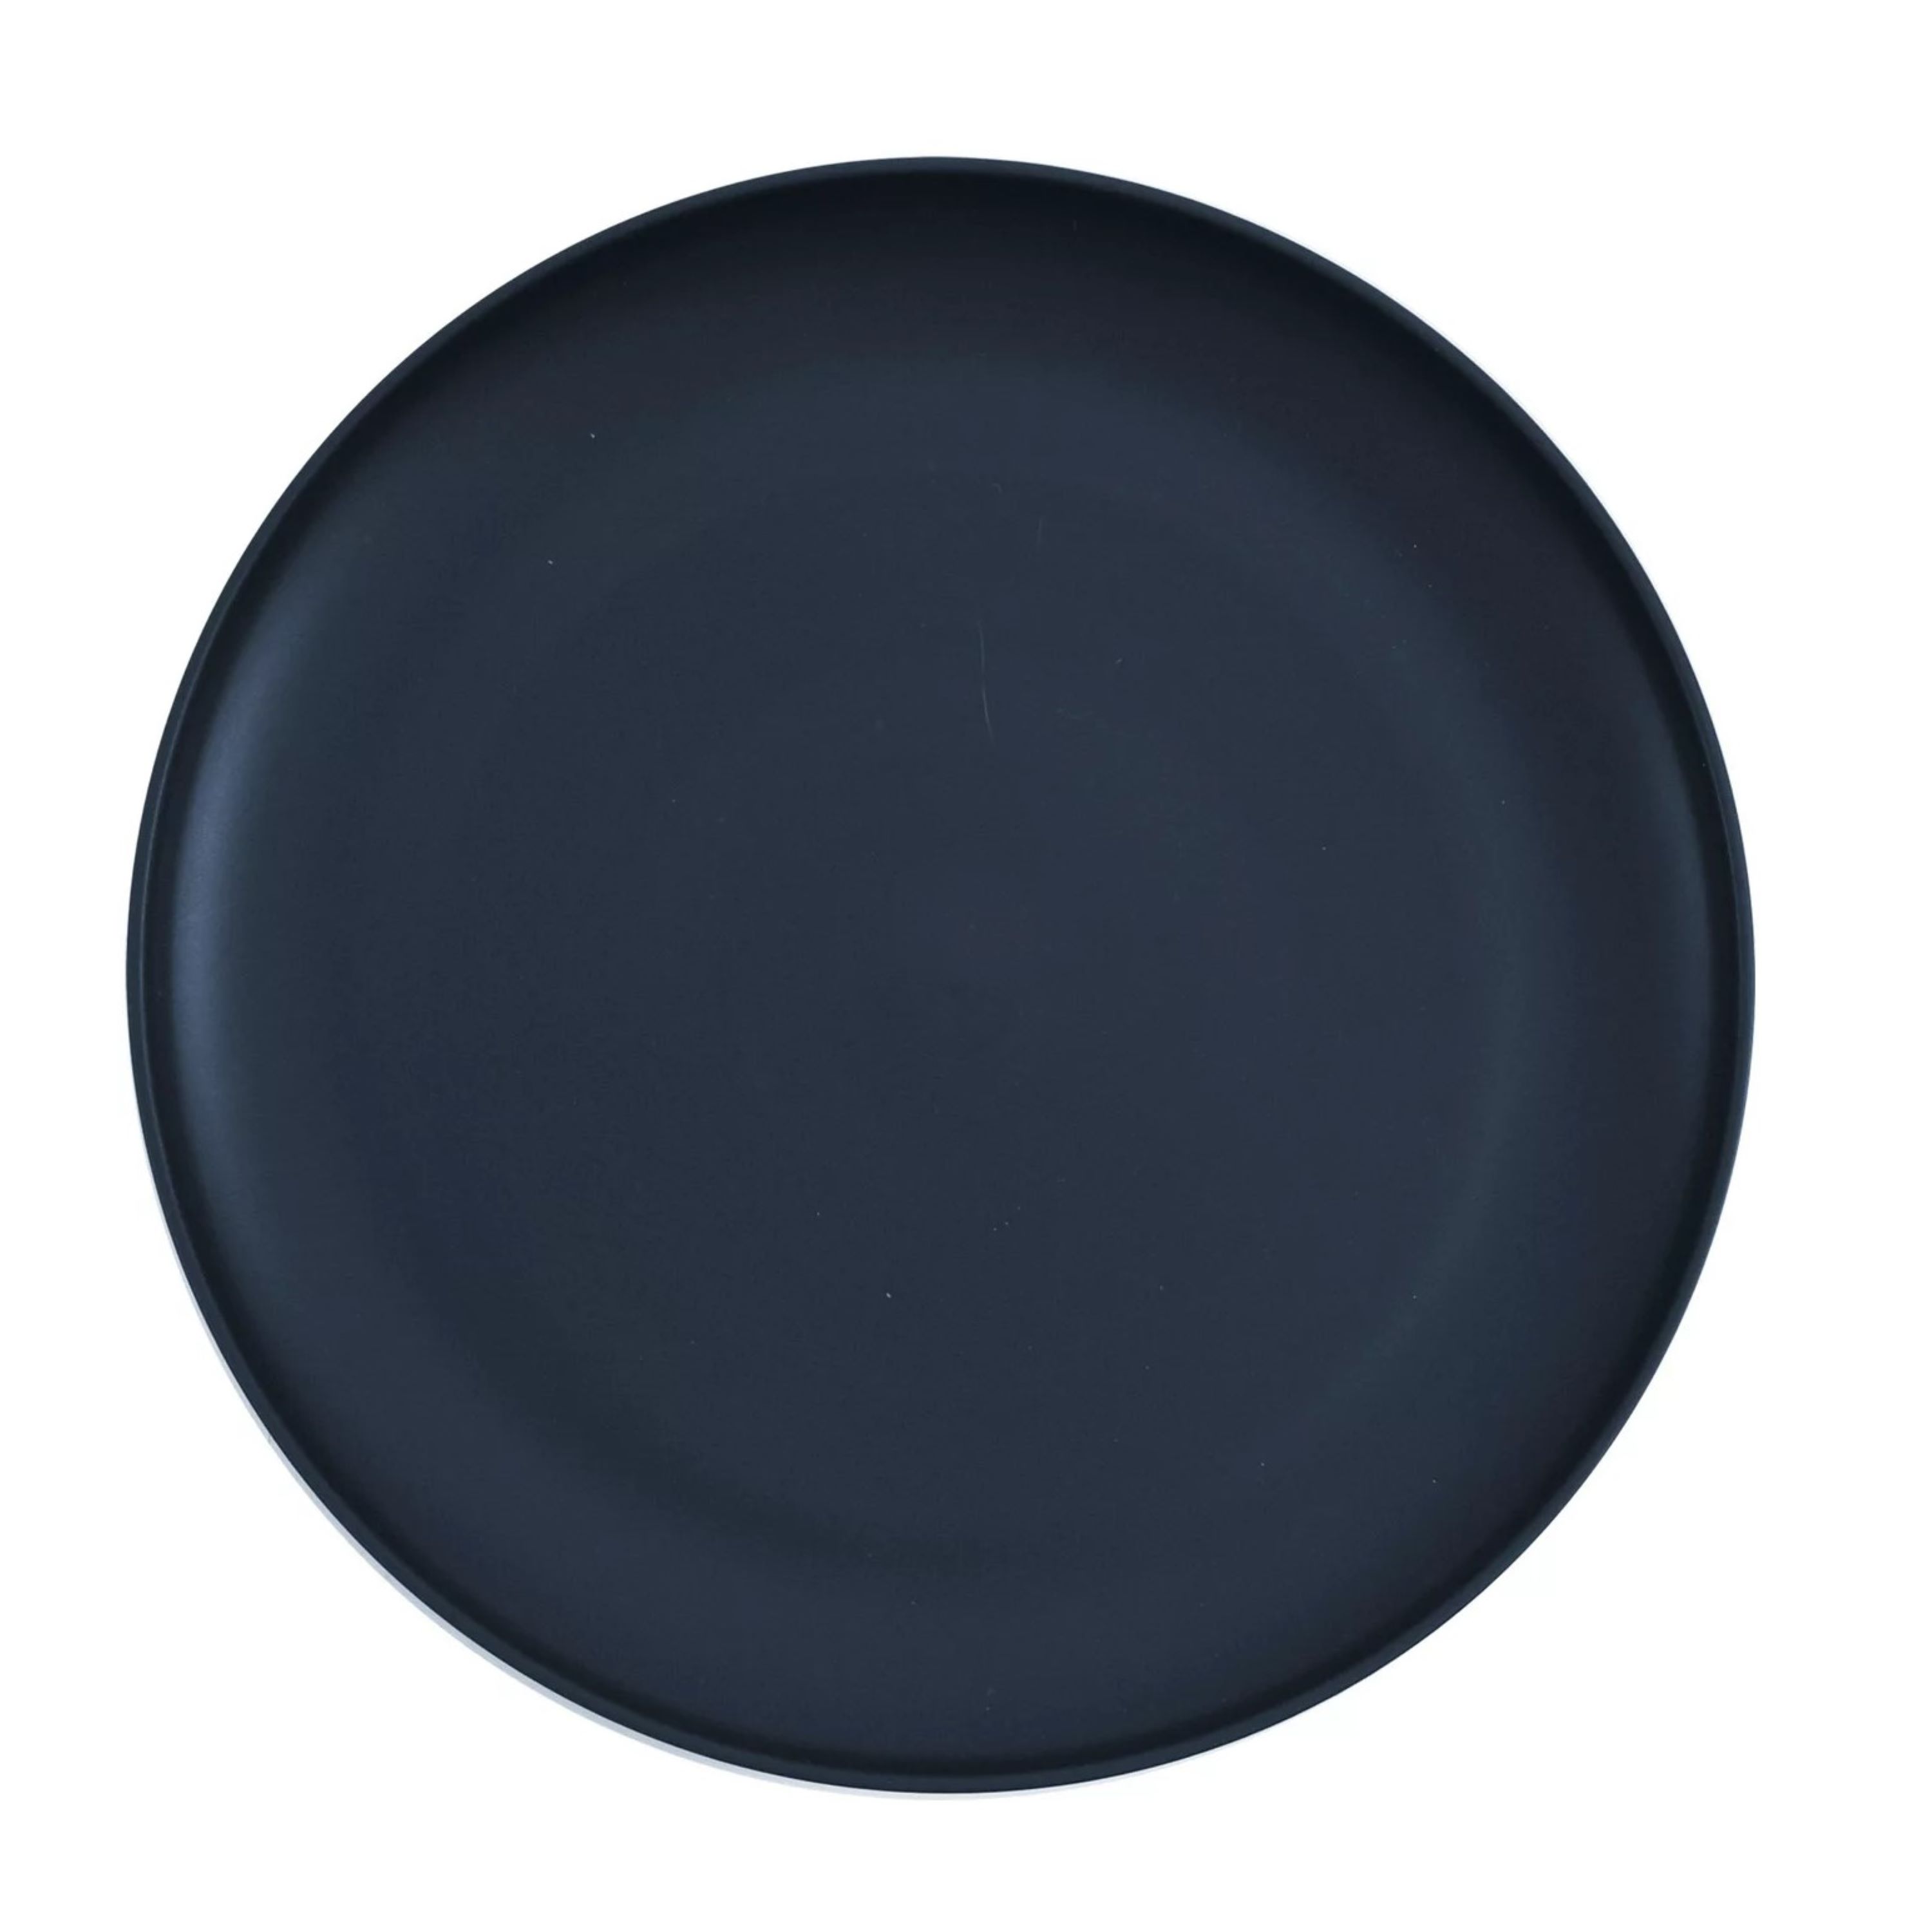 Mainstays - Dark Blue Round Plastic Plate, 10.5 inch - image 1 of 4